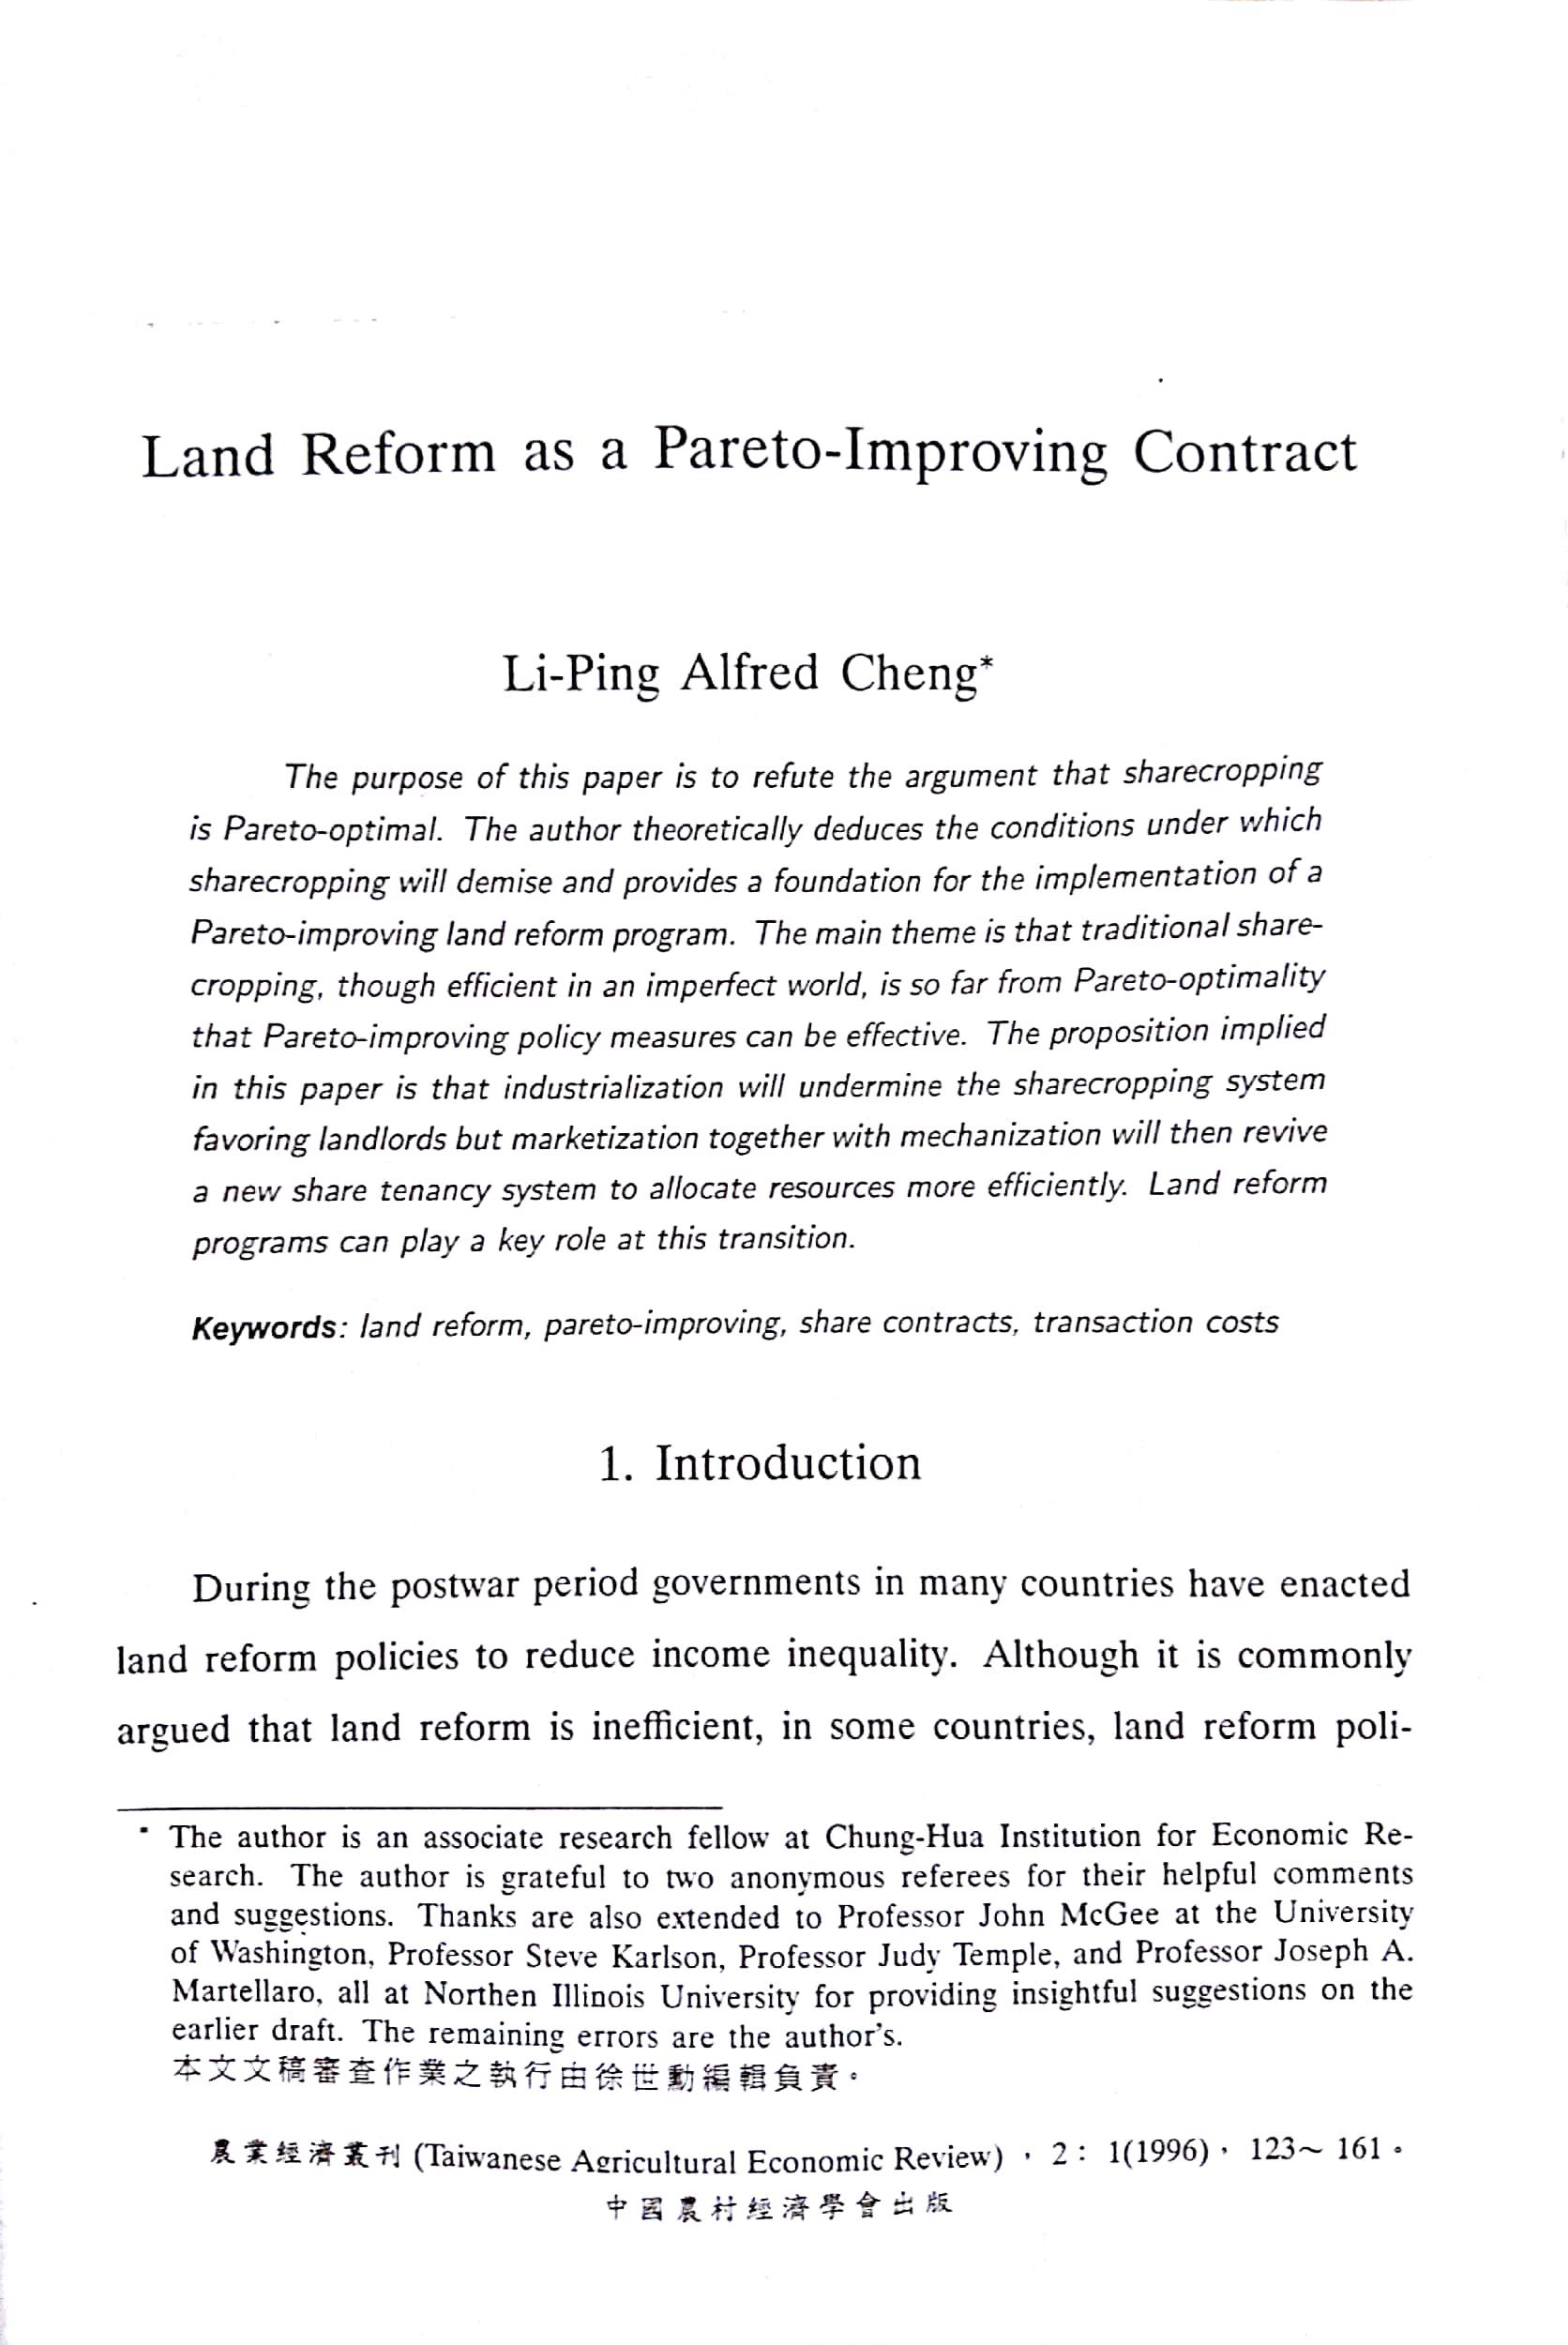 Land_Reform_as_a_Pareto-Improving_Contract.jpg